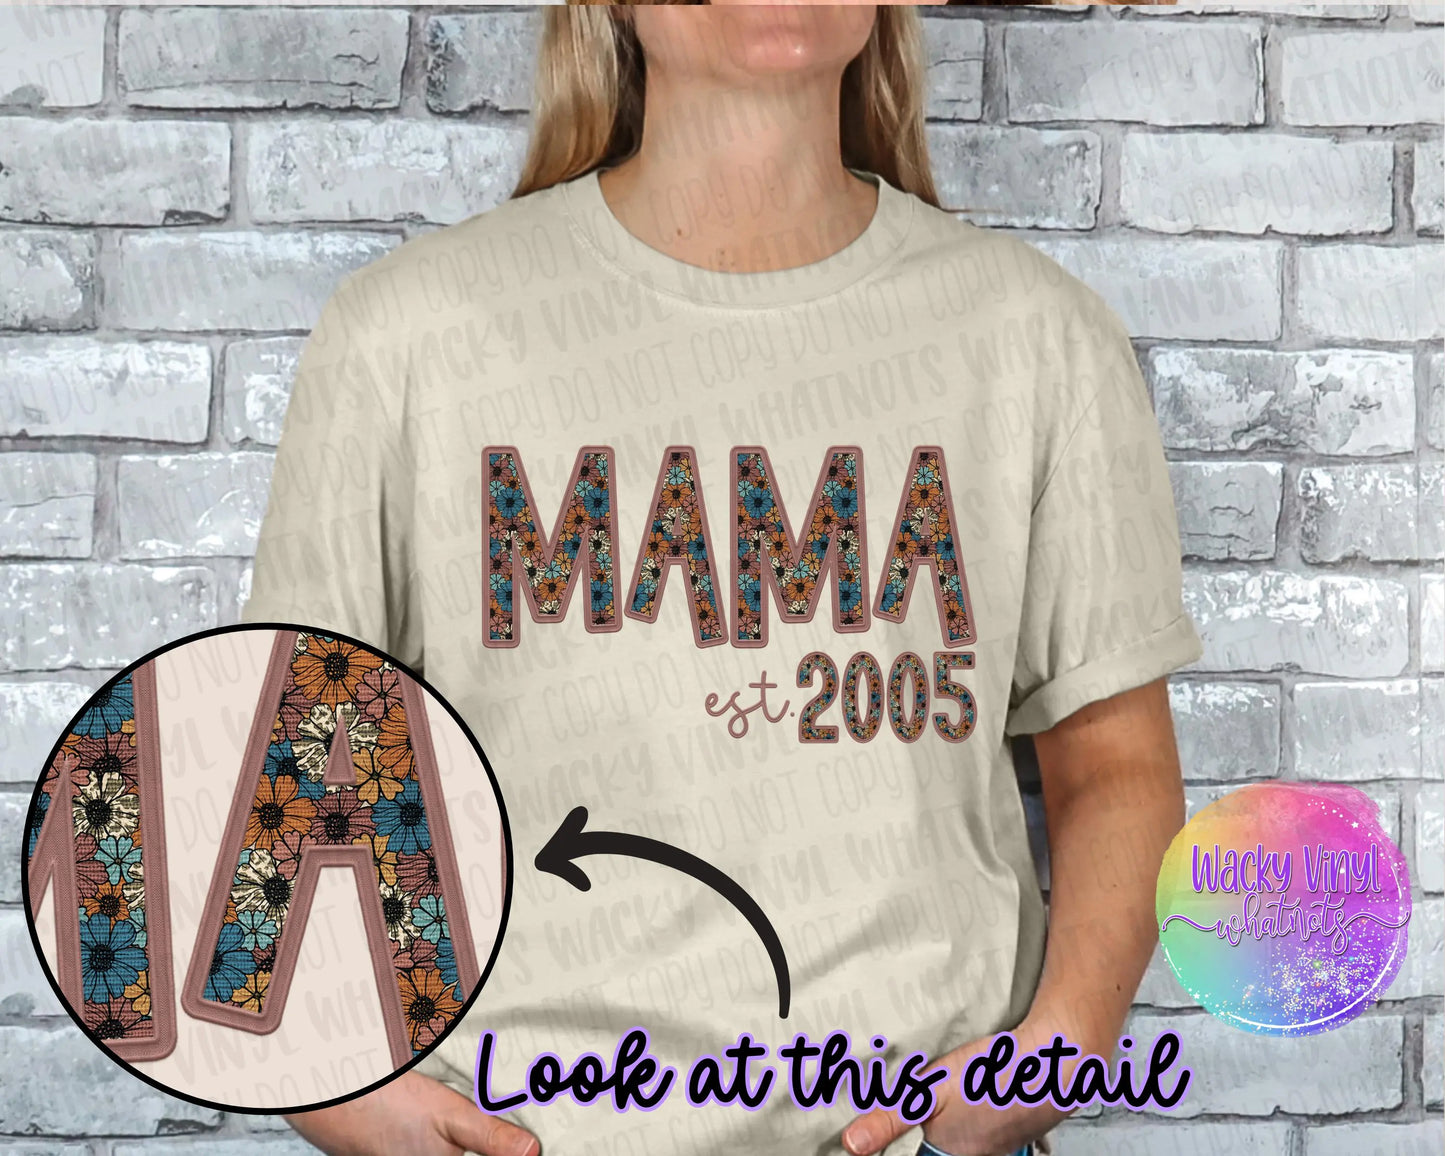 Mama, Mom, Grandma (& others) est Year Tee or Crew Wacky Vinyl Whatnots, LLC